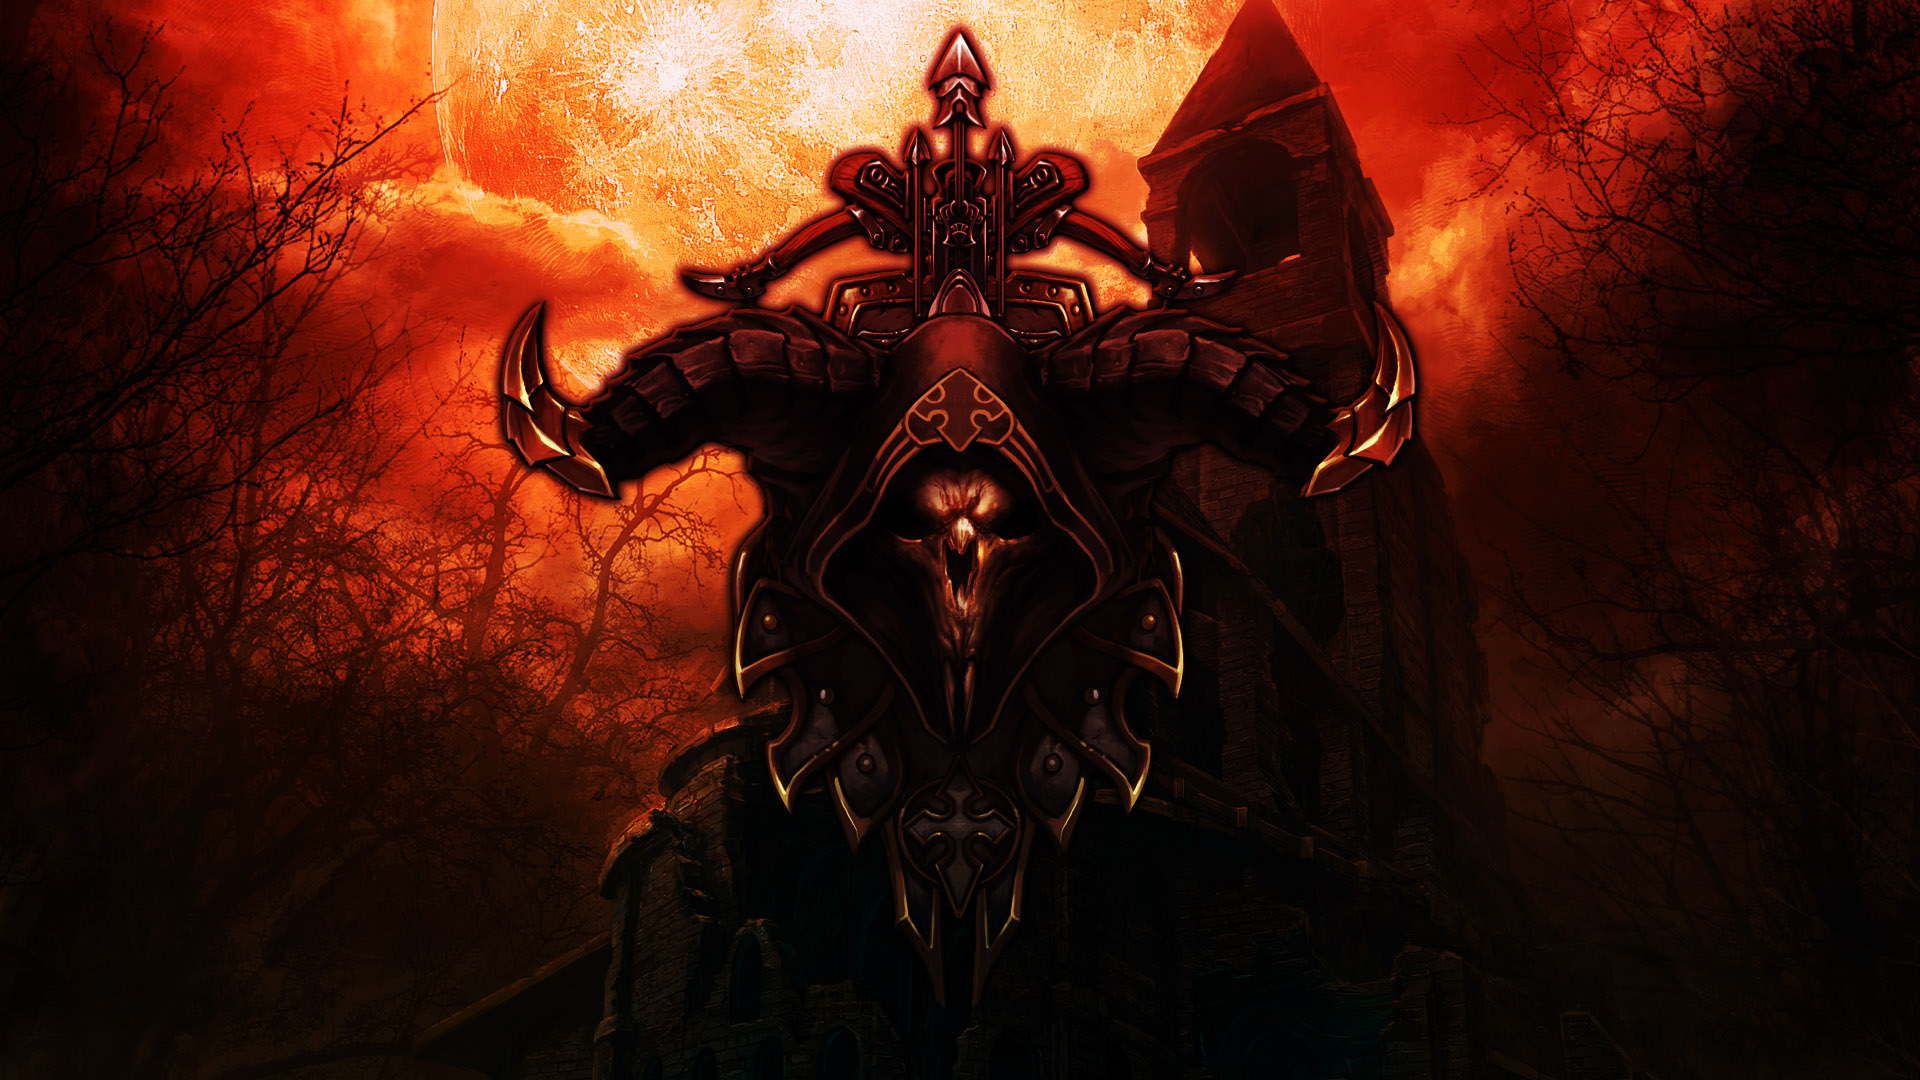 Dark and menacing Demon Hunter character from the video game Diablo III.